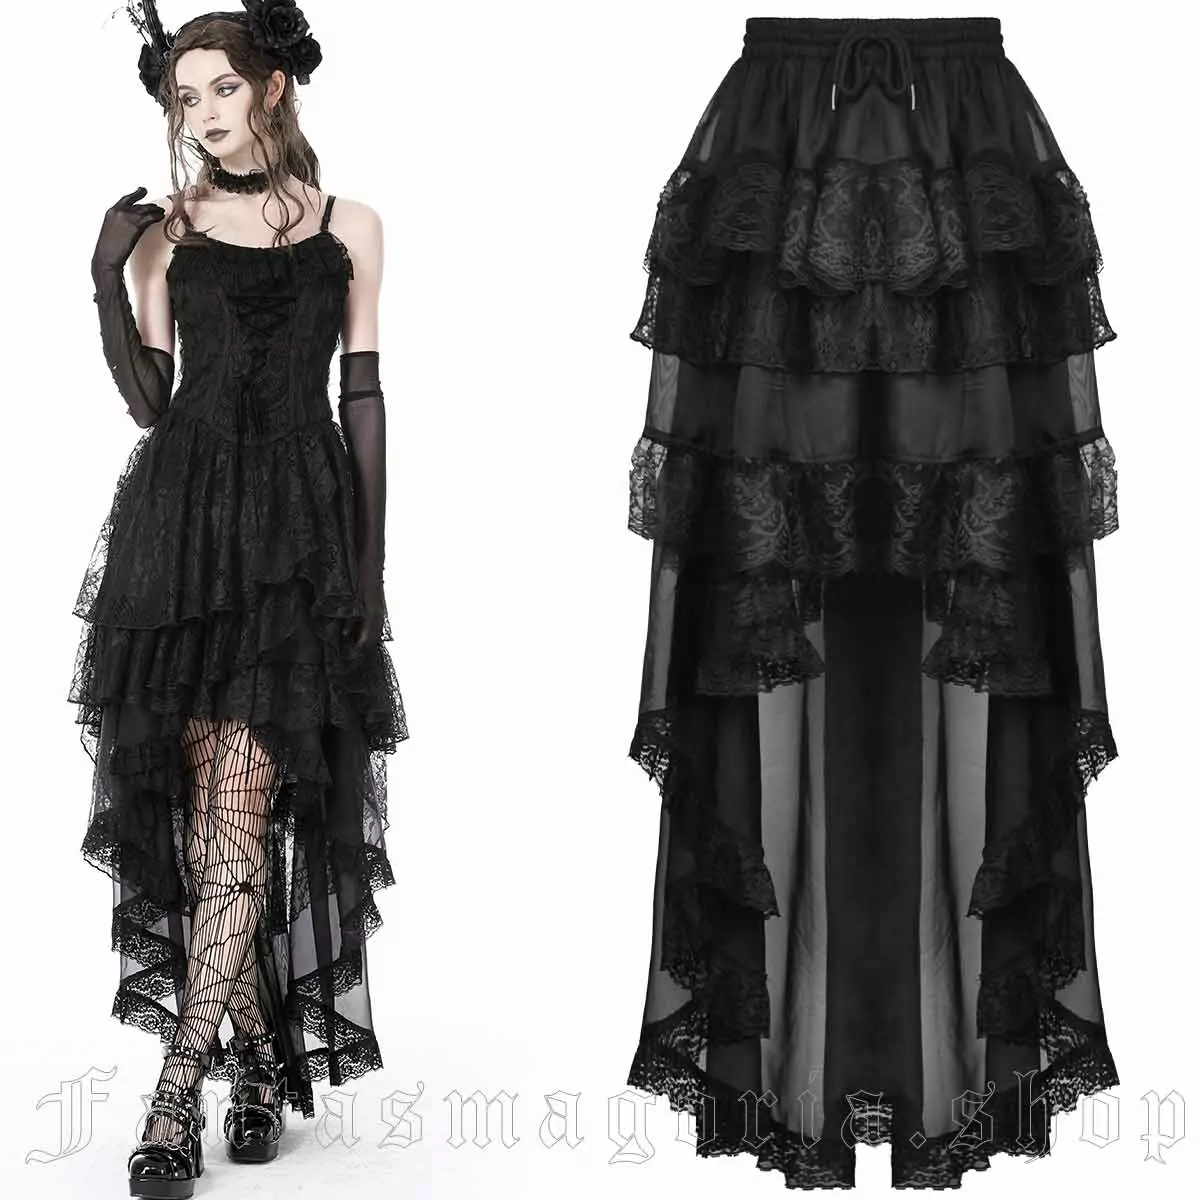 Women's Gothic high low black chiffon lace ruffle skirt. - Dark in Love - KW263